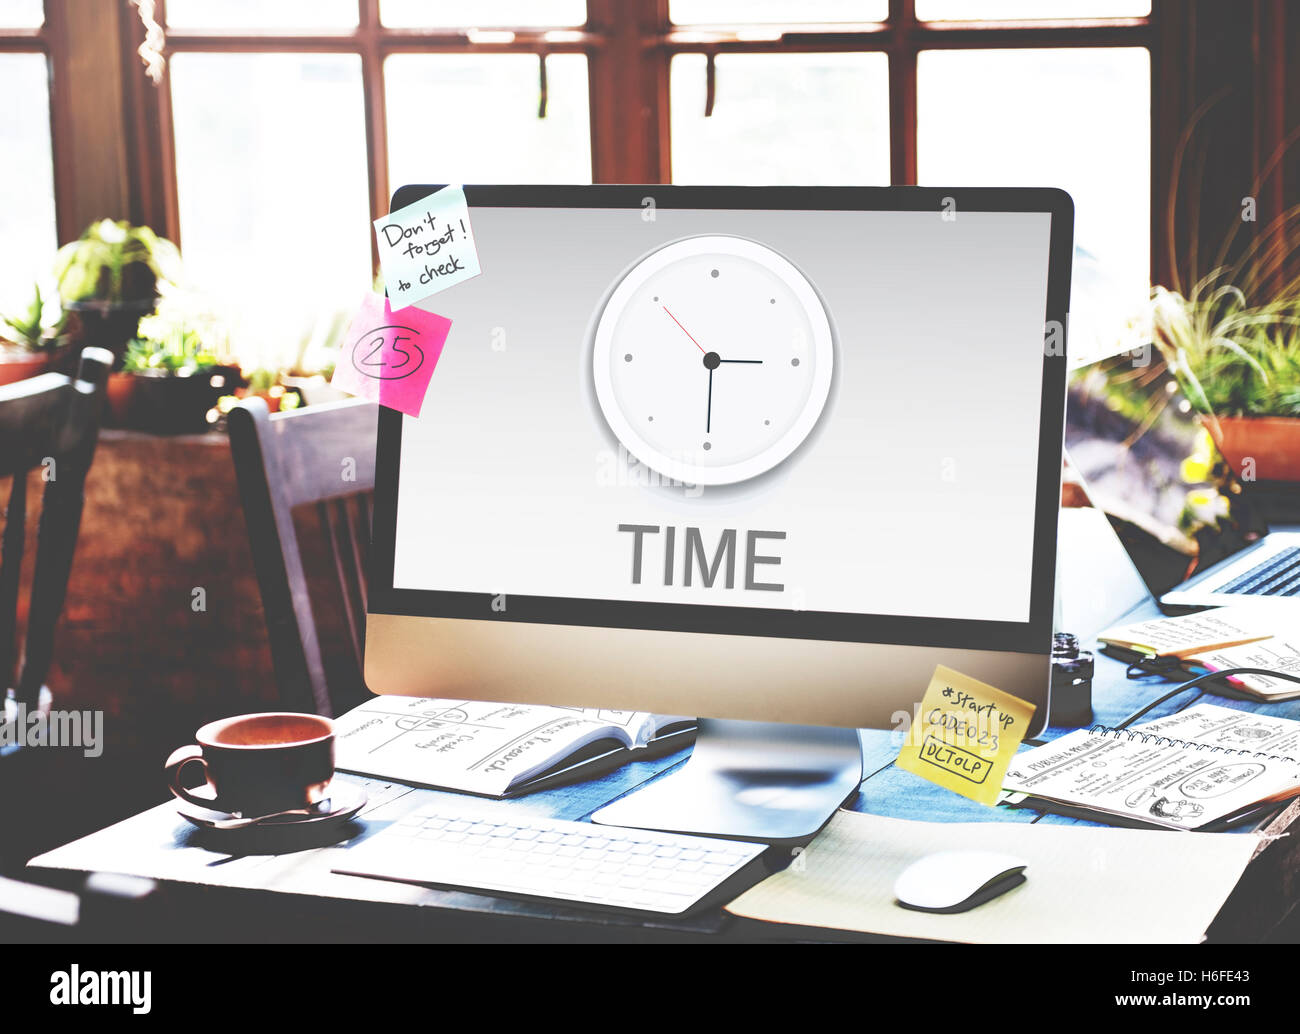 Time Clock Management Concept Stock Photo